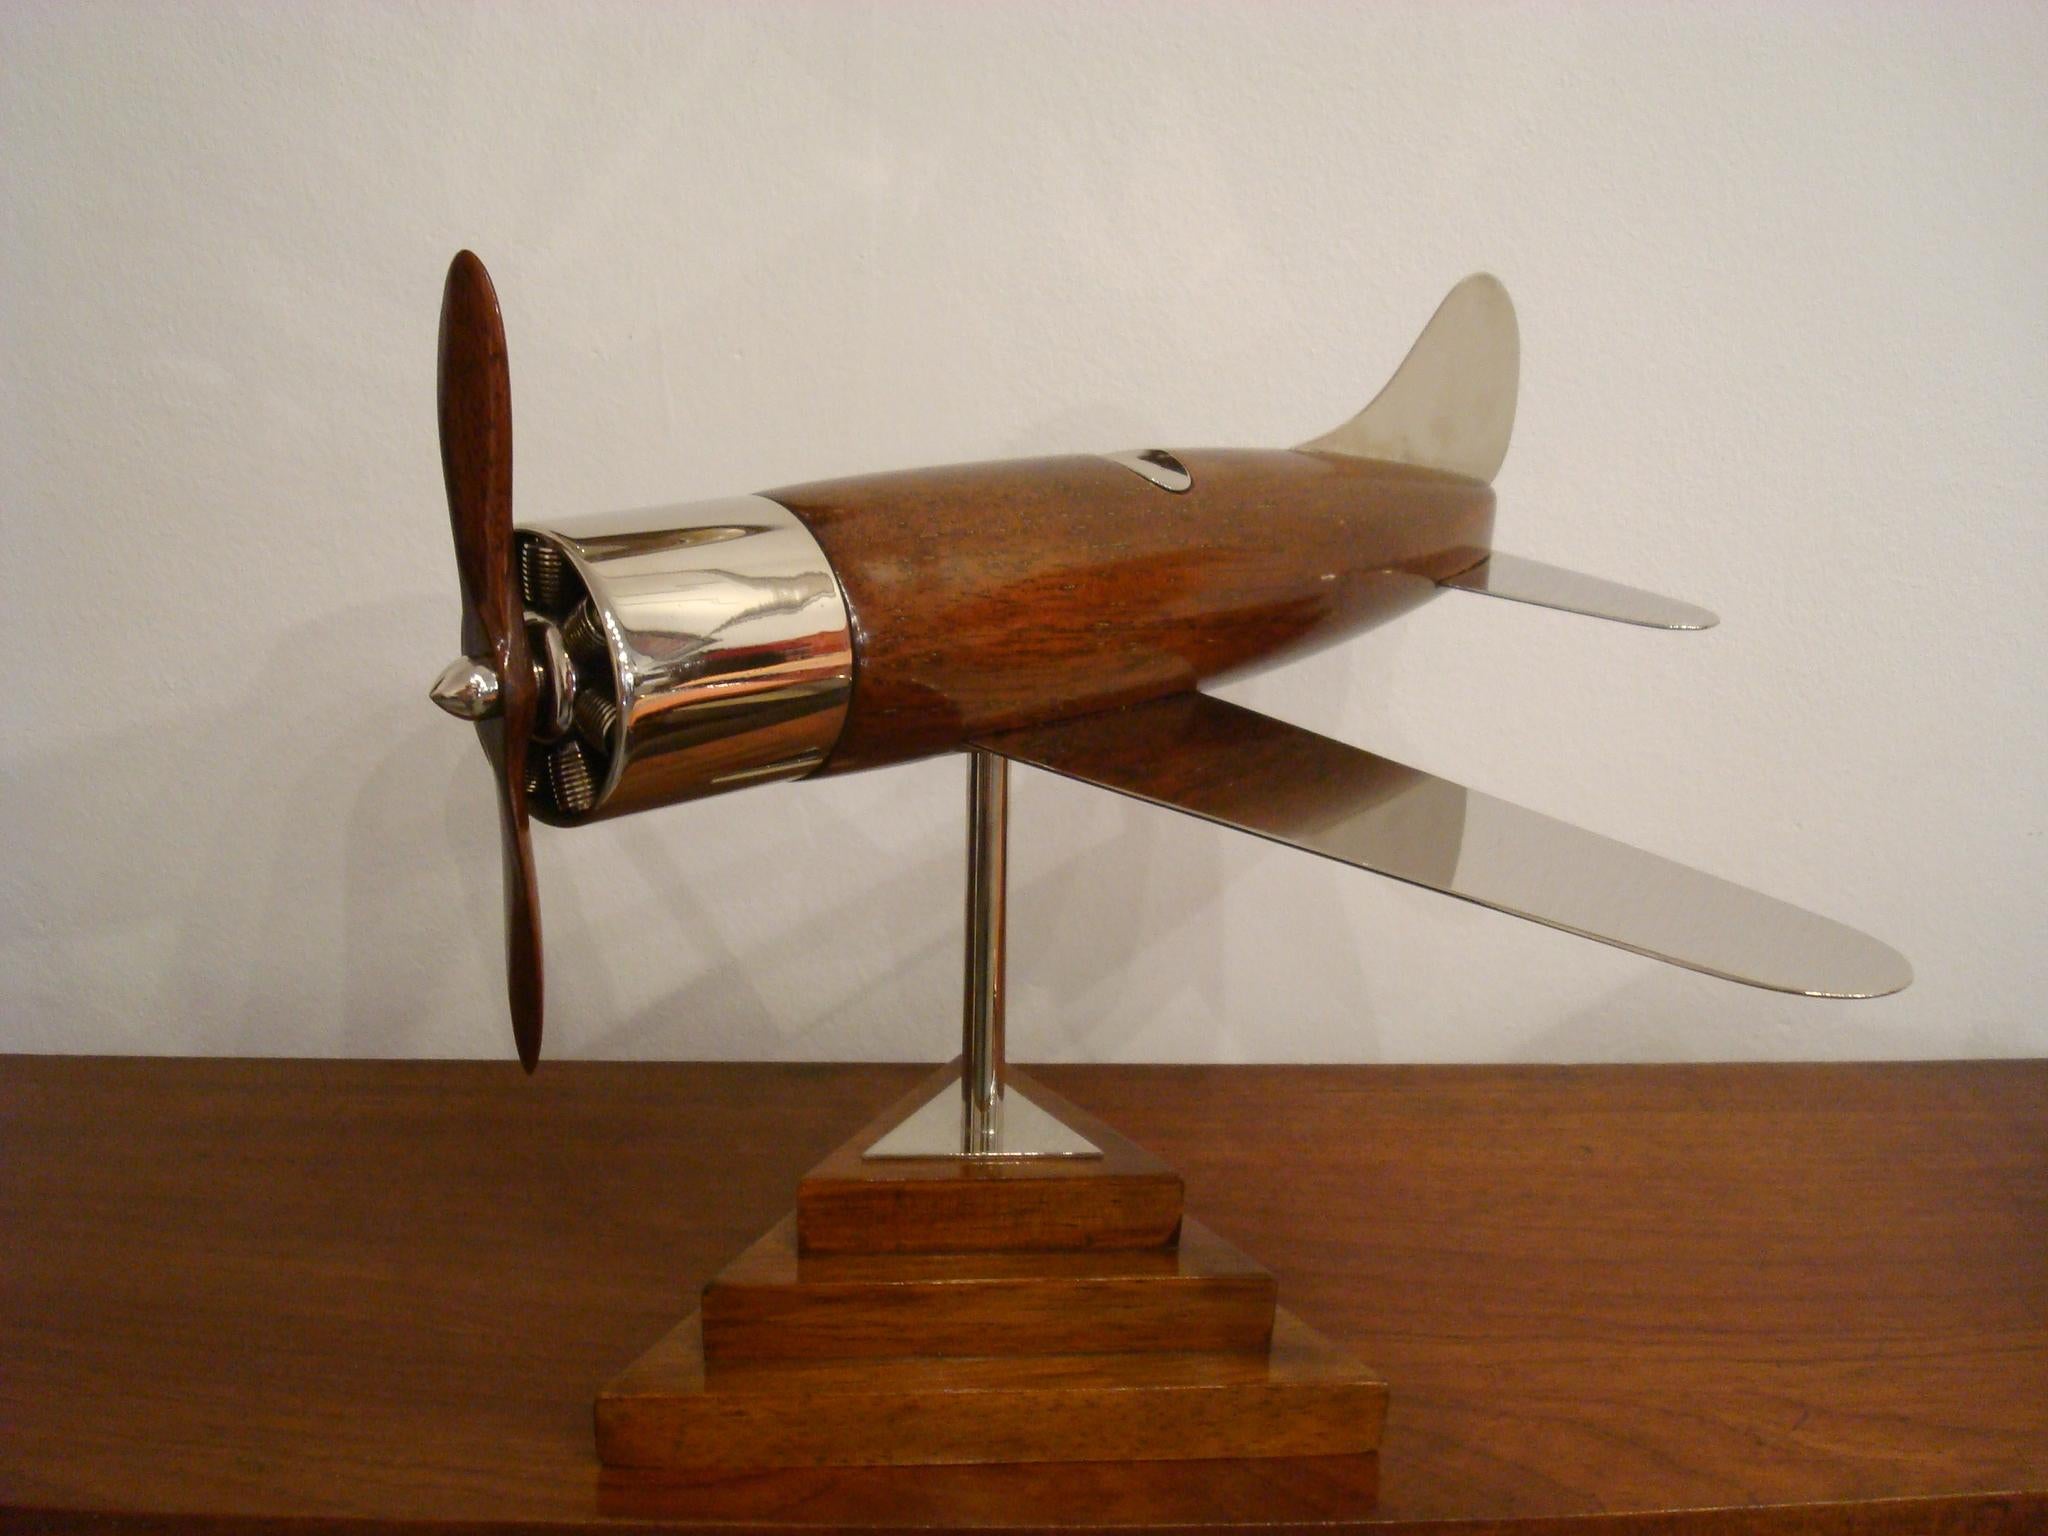 French 20th Century, Art Deco Streamline Airplane Wooden Model Sculpture, 1930s